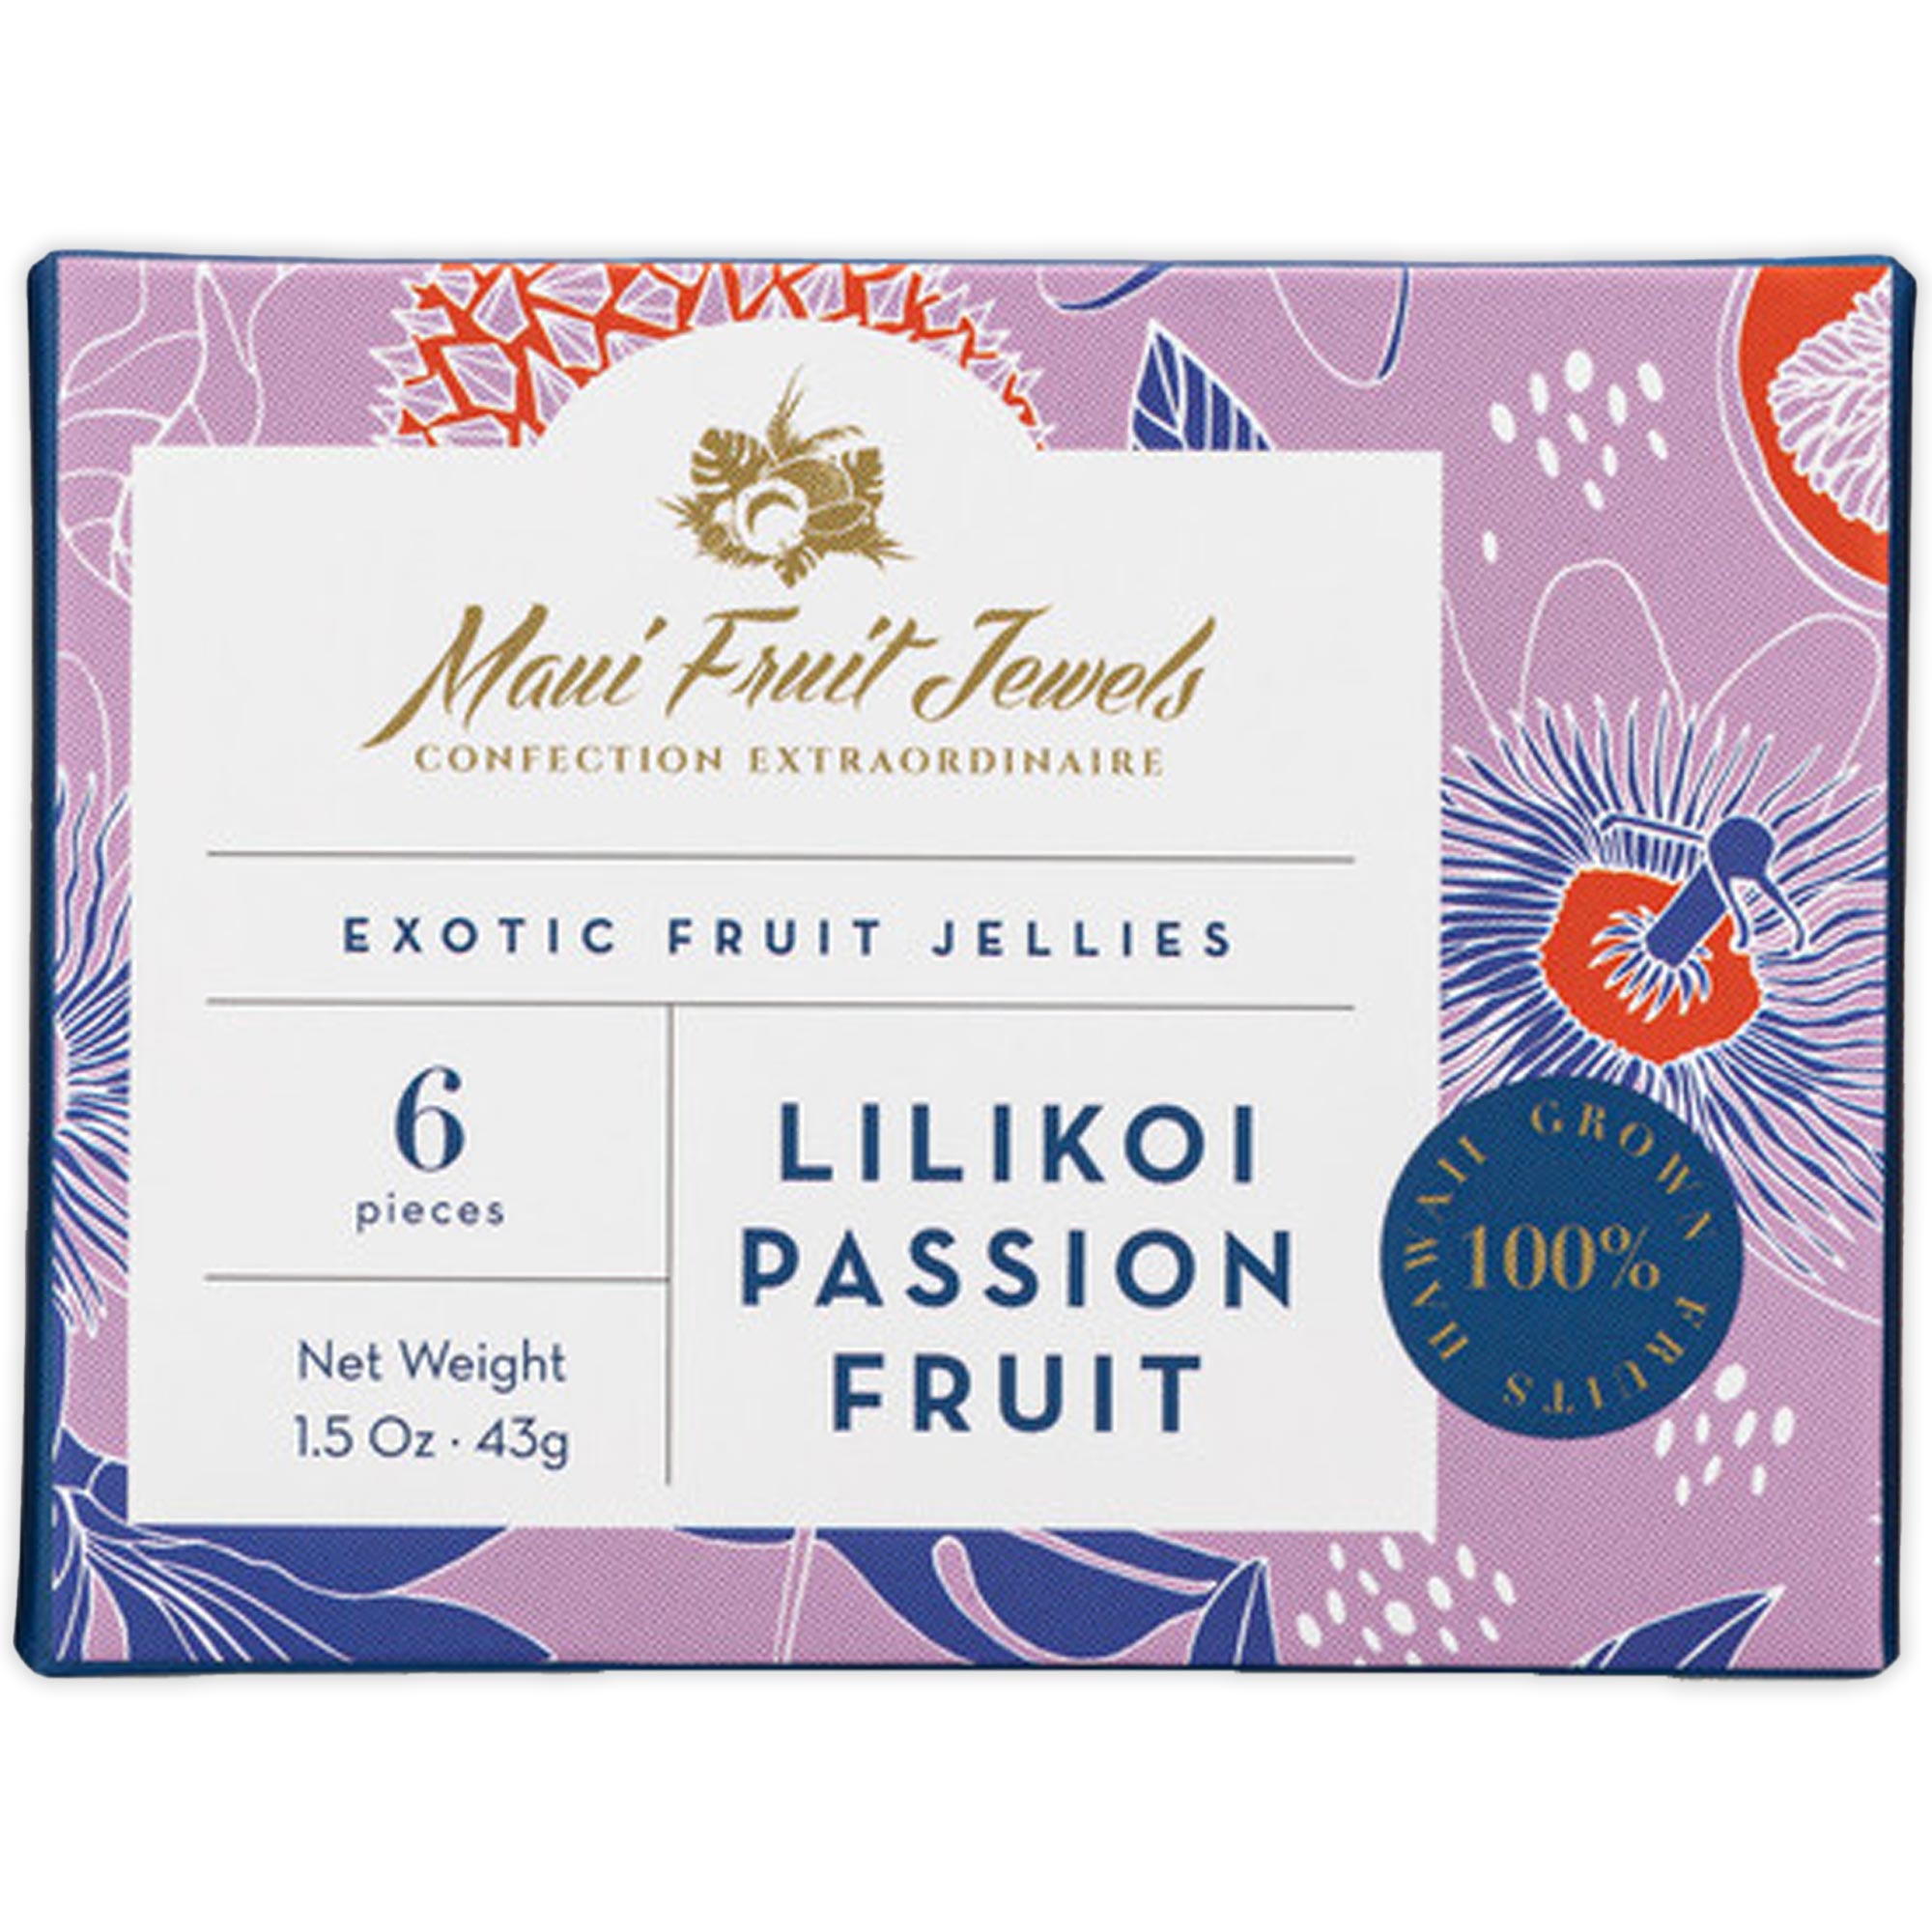 Maui Fruit Jewels Lilikoi Passion Fruit Fruit Jellies, 6-Piece